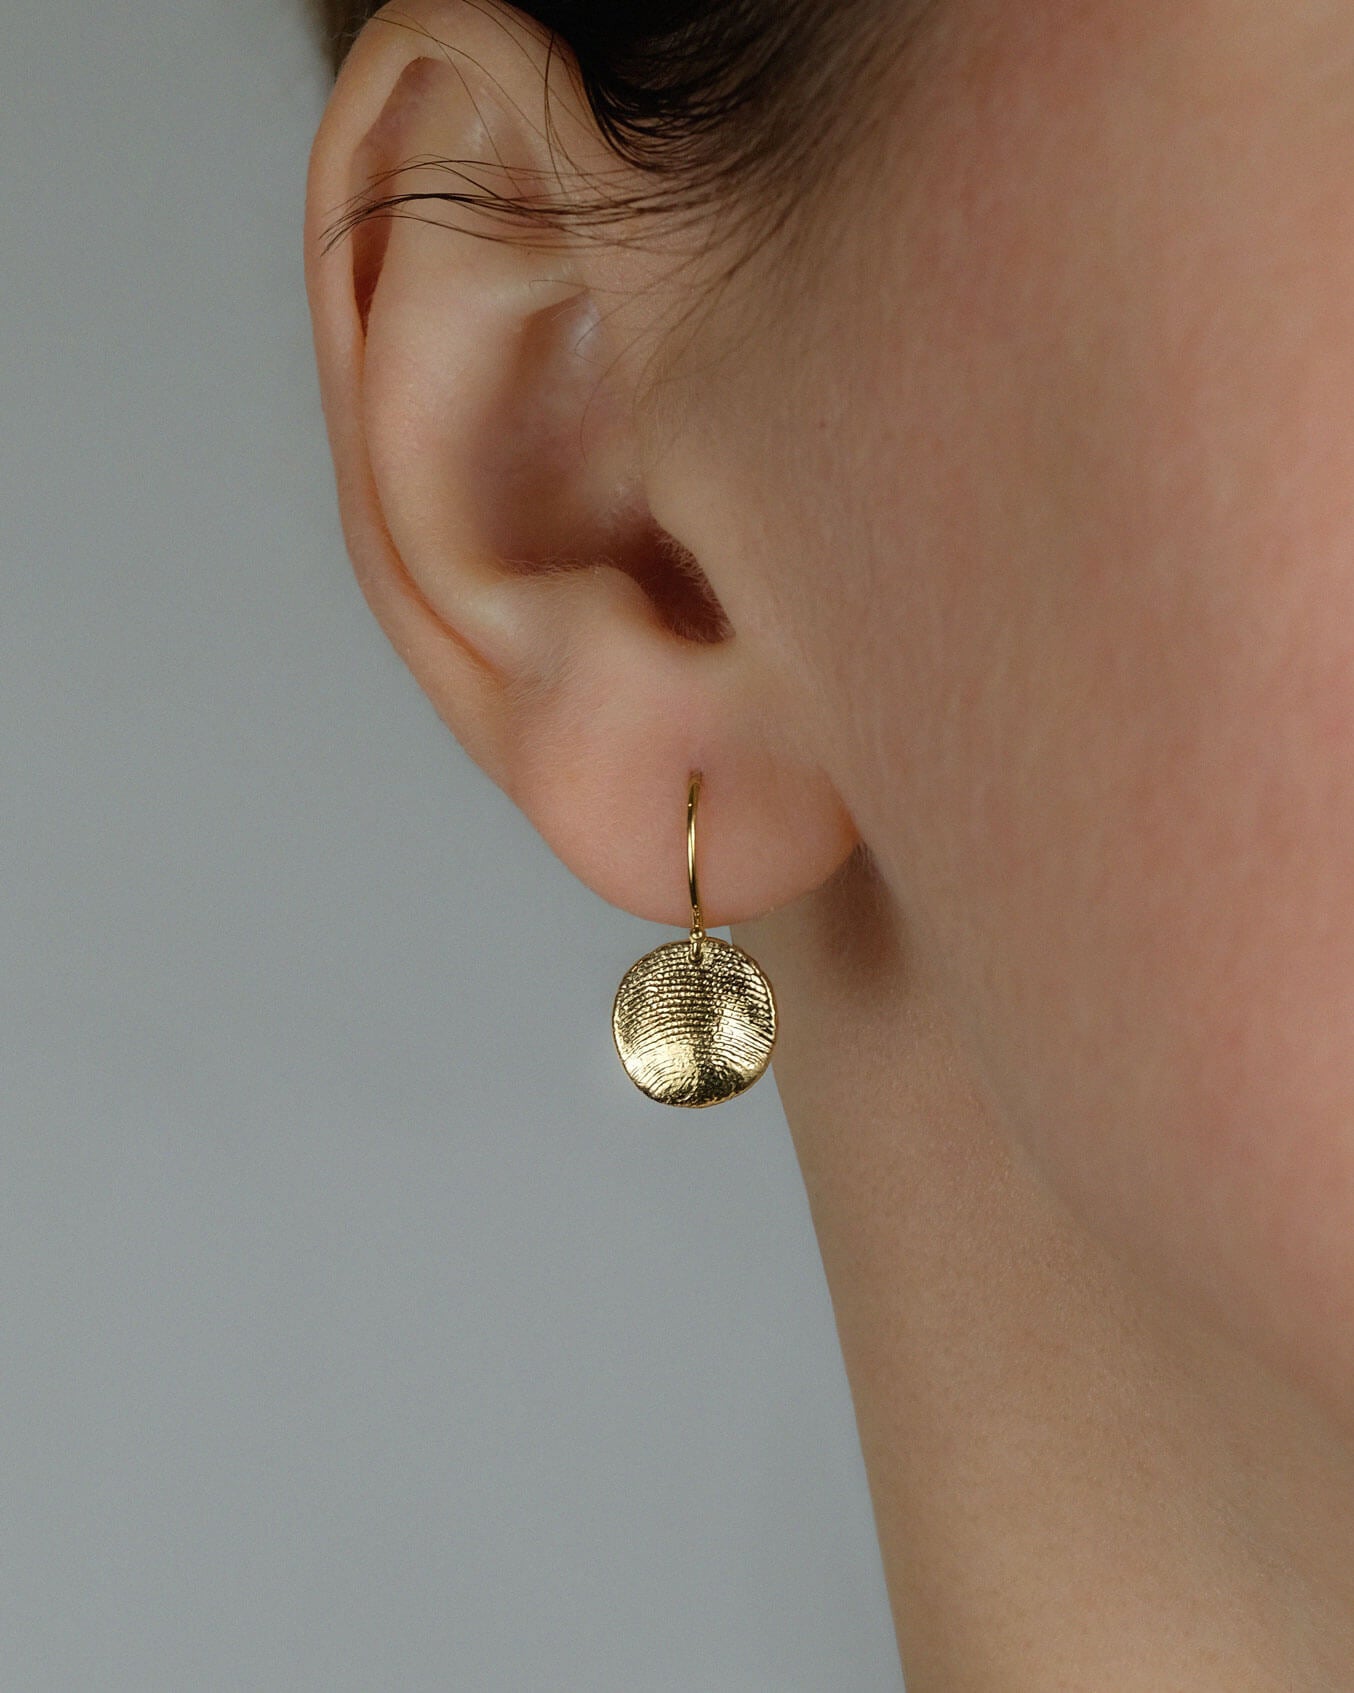 Mini Fingerprints Hook Earrings in solid 14k yellow gold by Matanai Jewelry